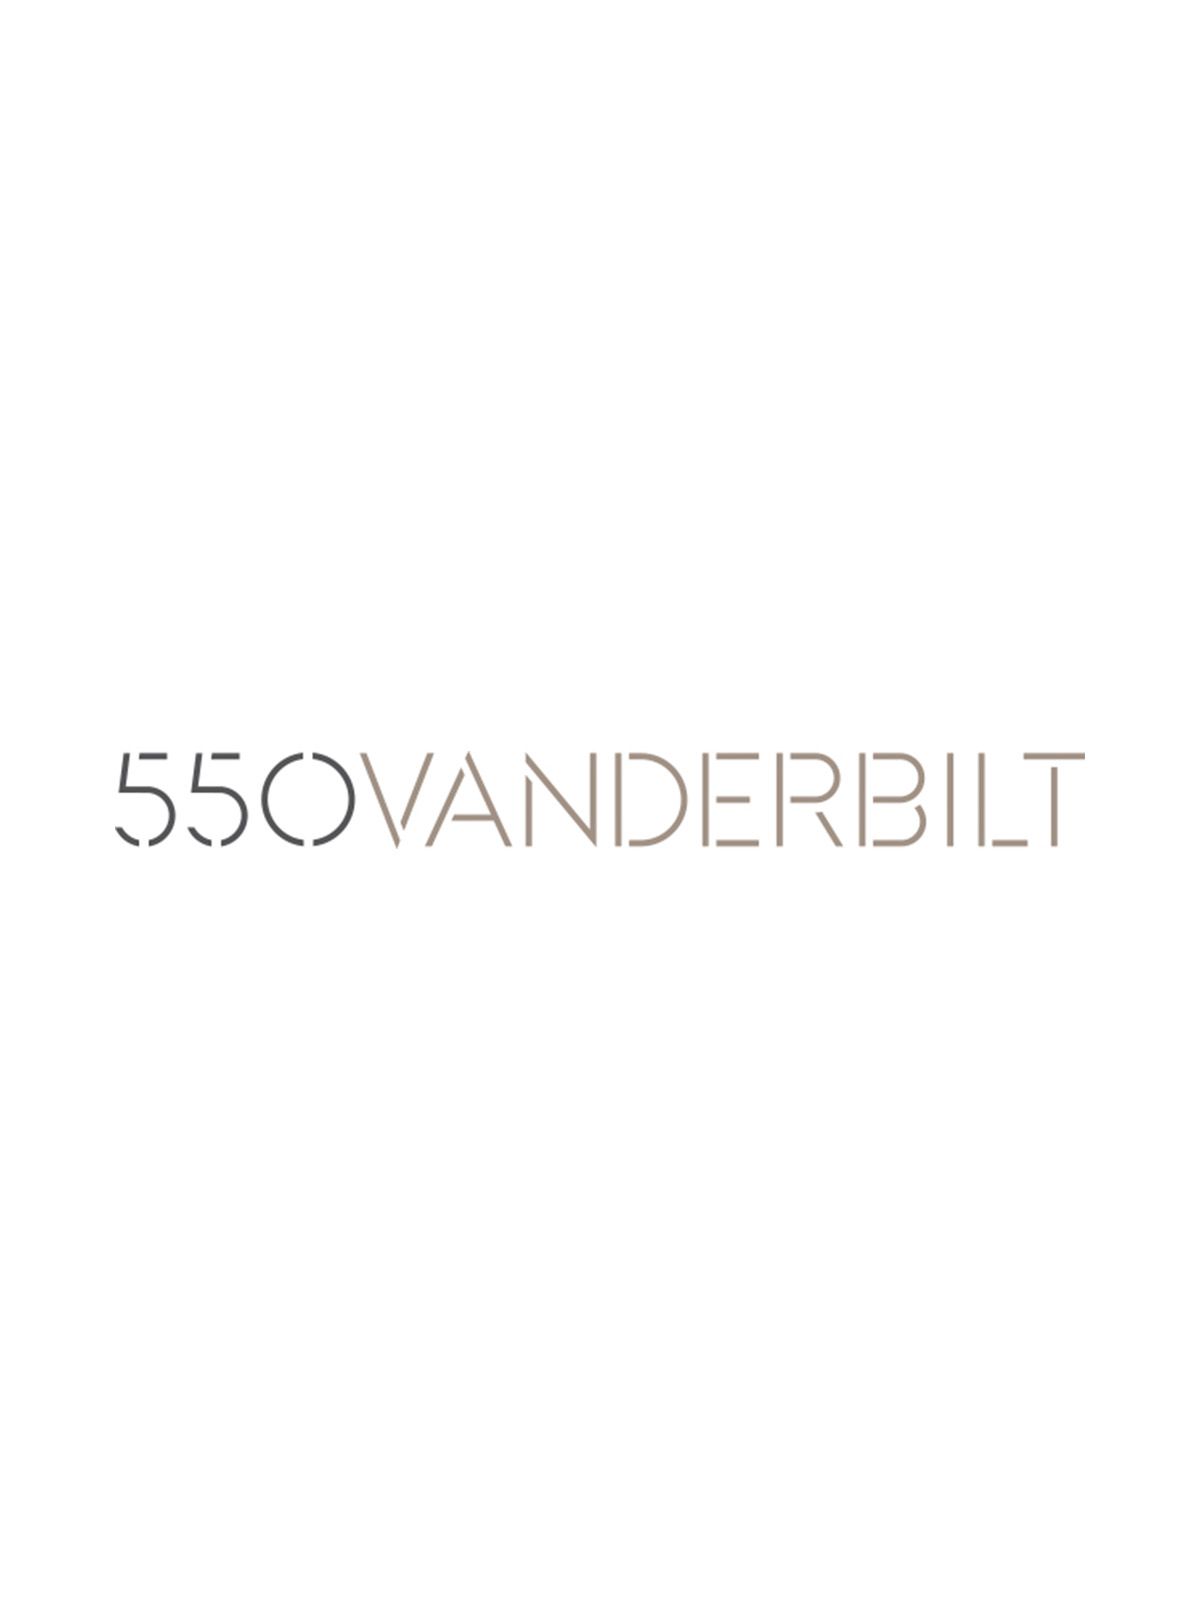 Real Simple Home Developer 550 Vanderbilt logo